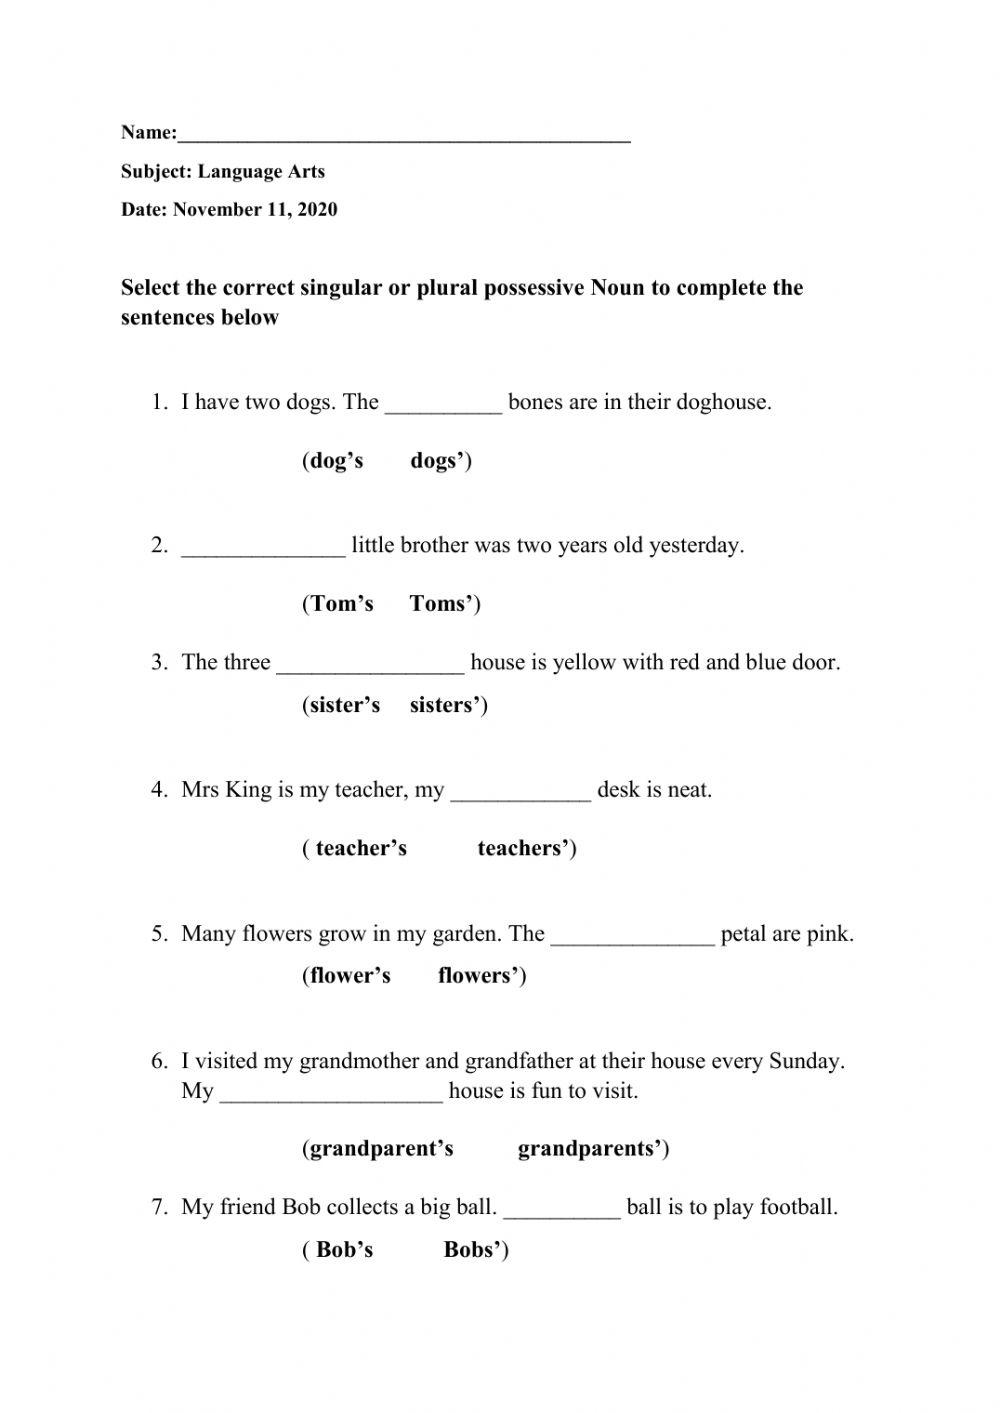 Possessive Nouns online pdf exercise | Live Worksheets